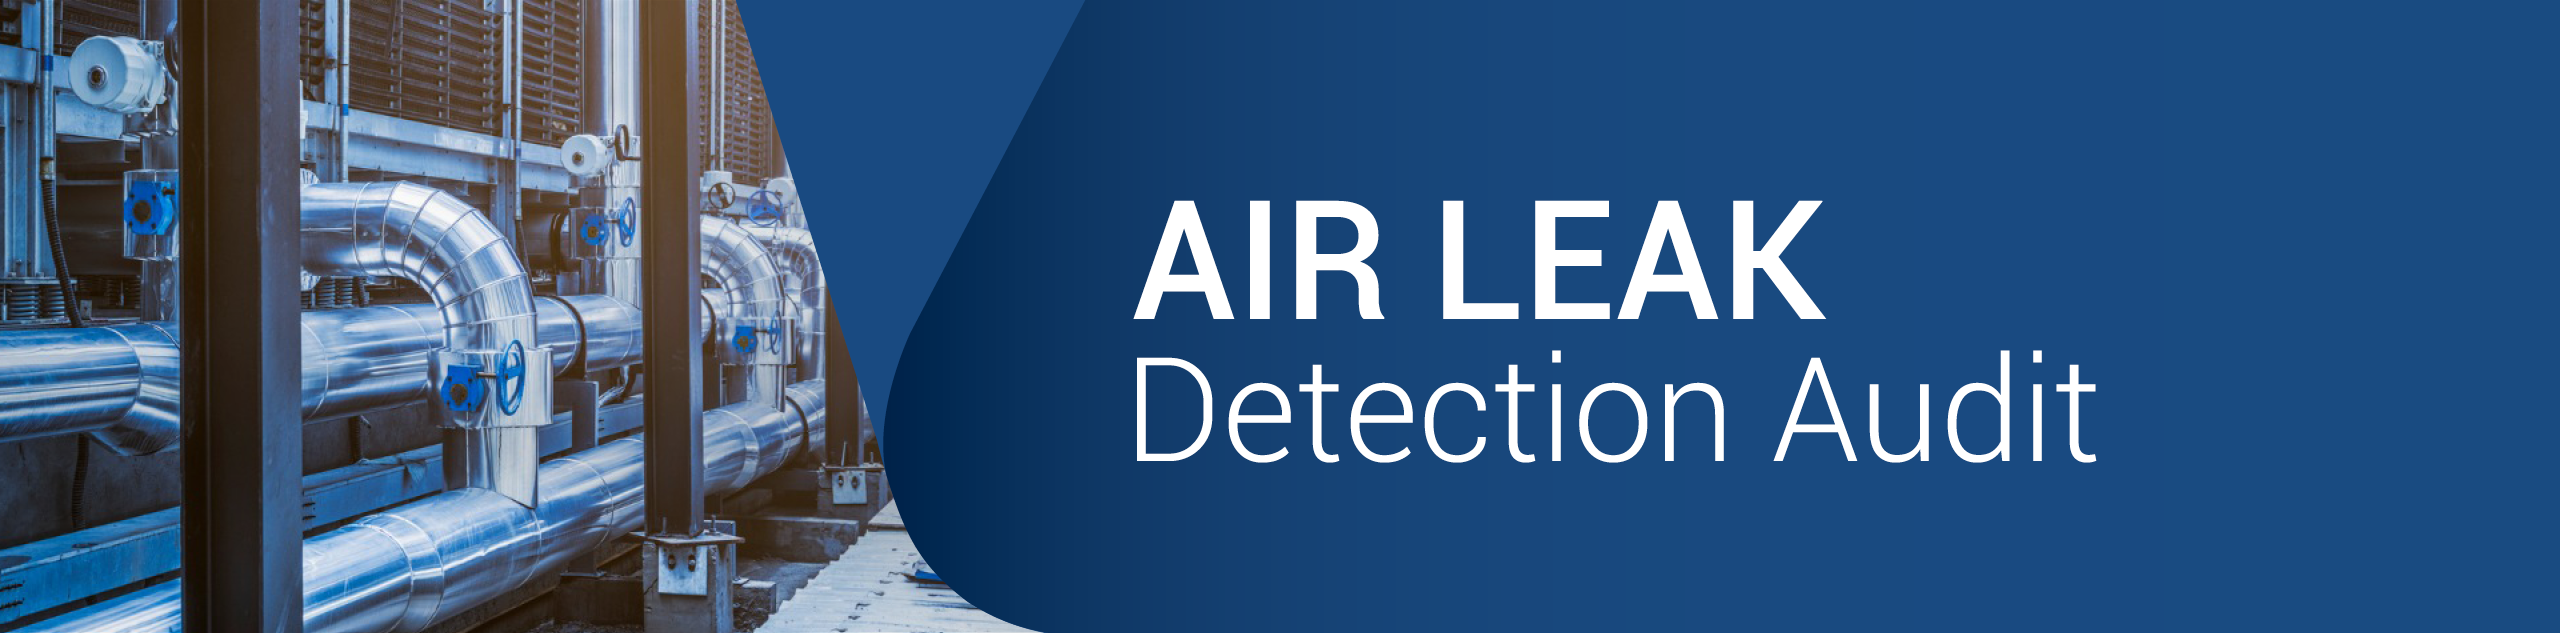 Air Leak Detection